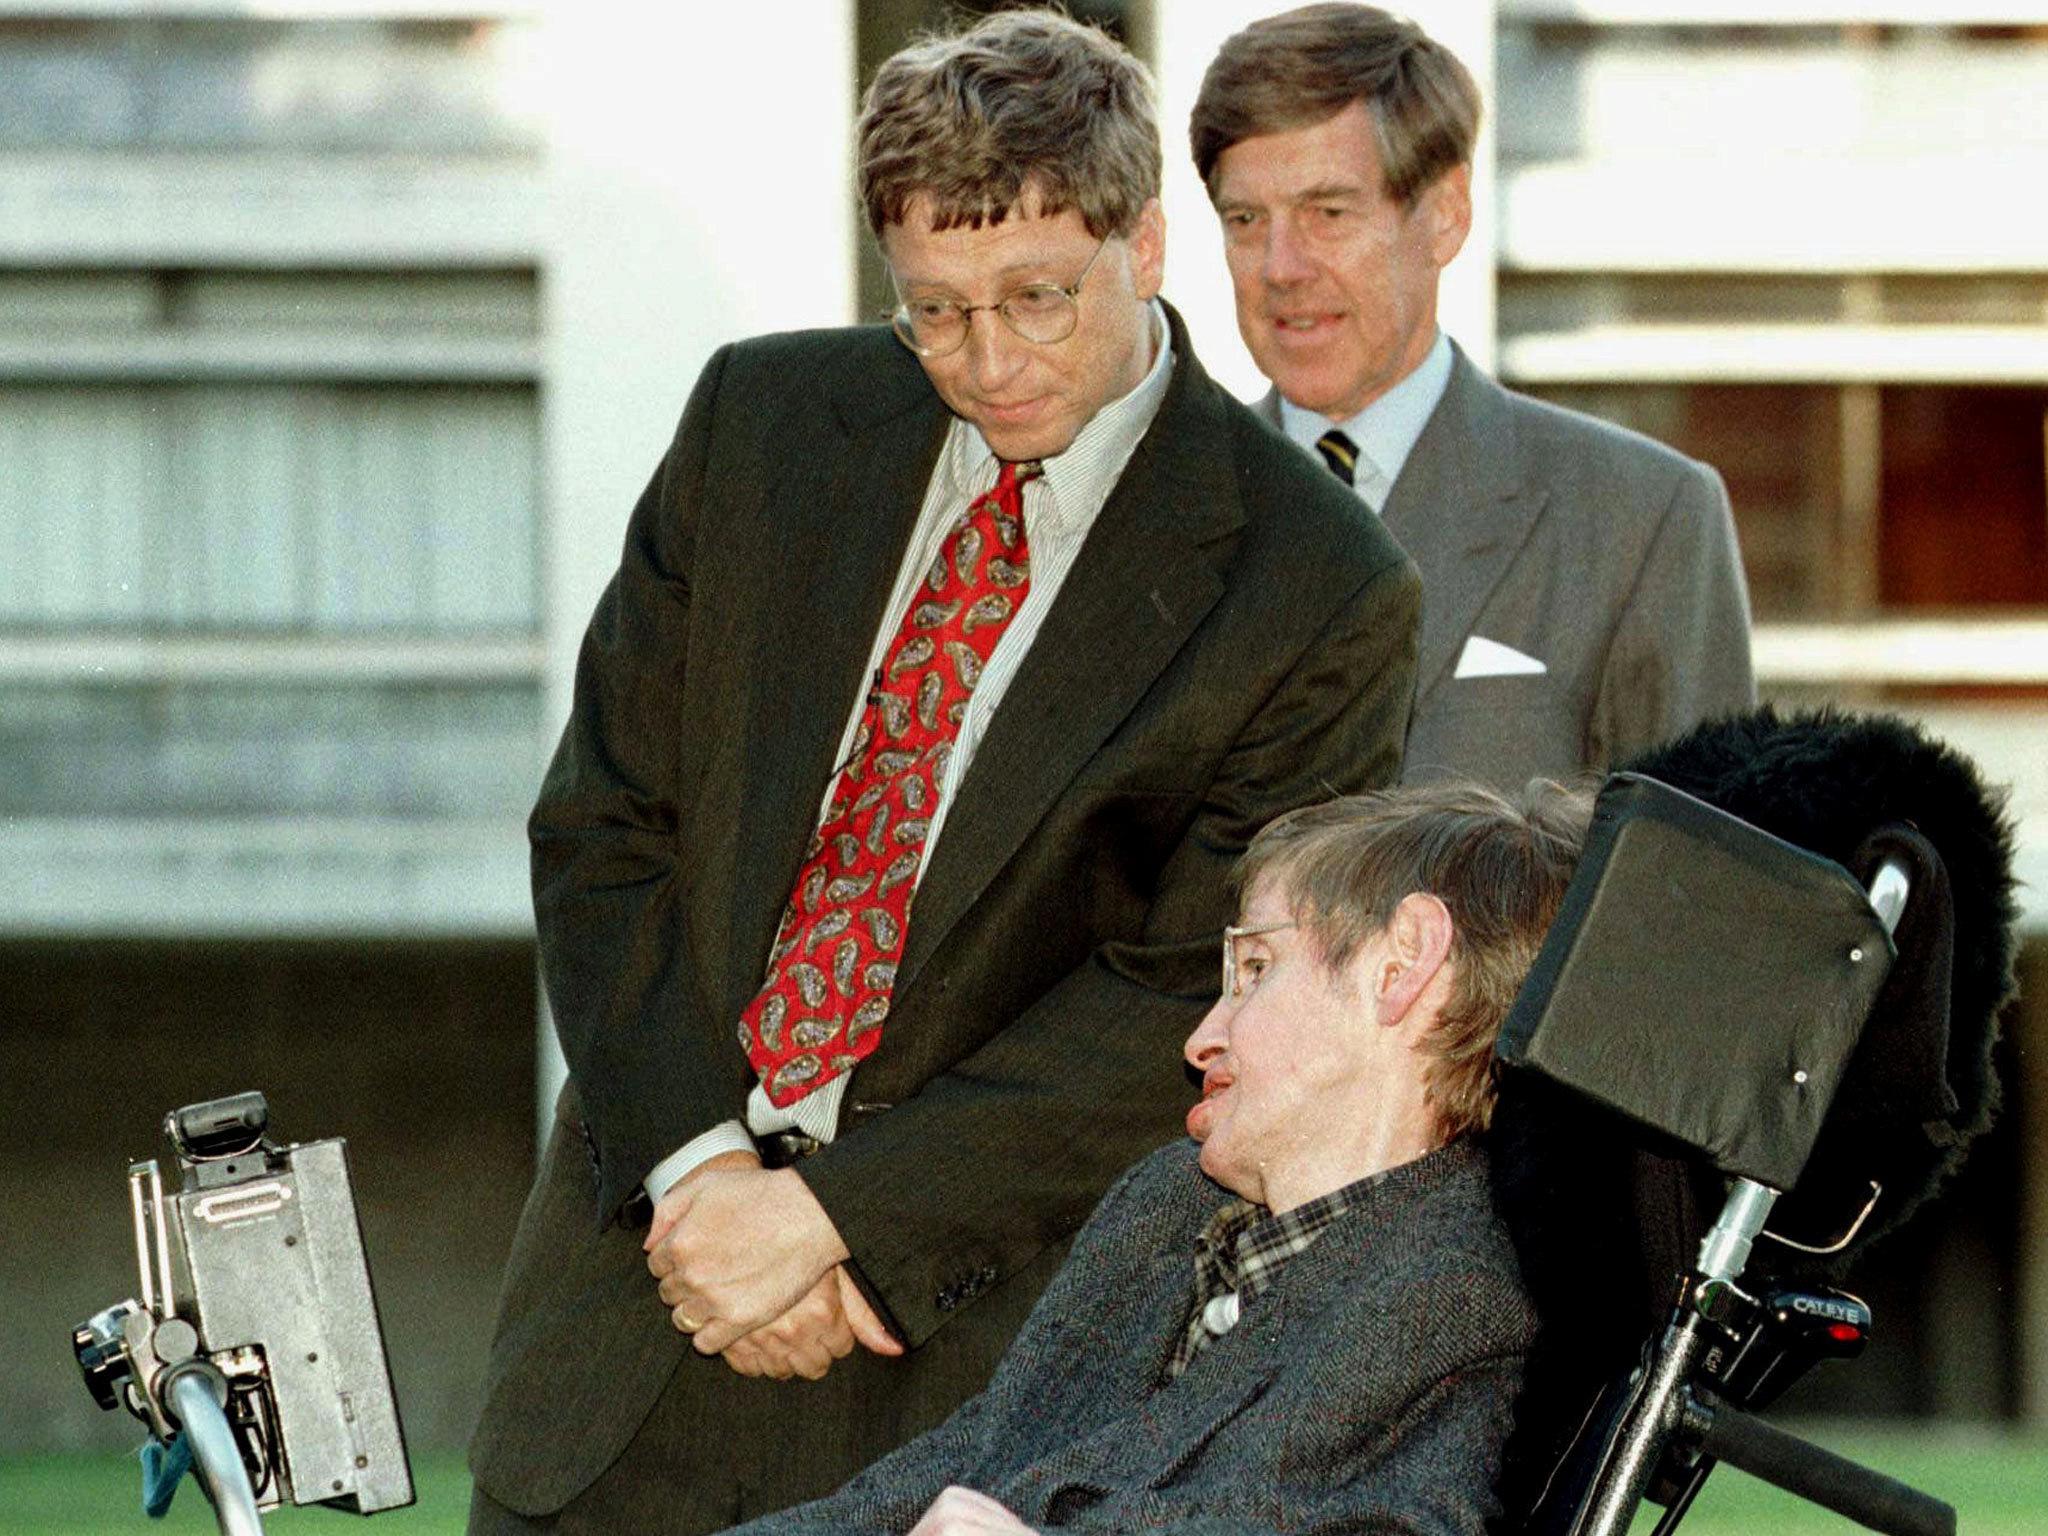 Bill Gates meets Professor Hawking during a visit to Cambridge University (REUTERS)